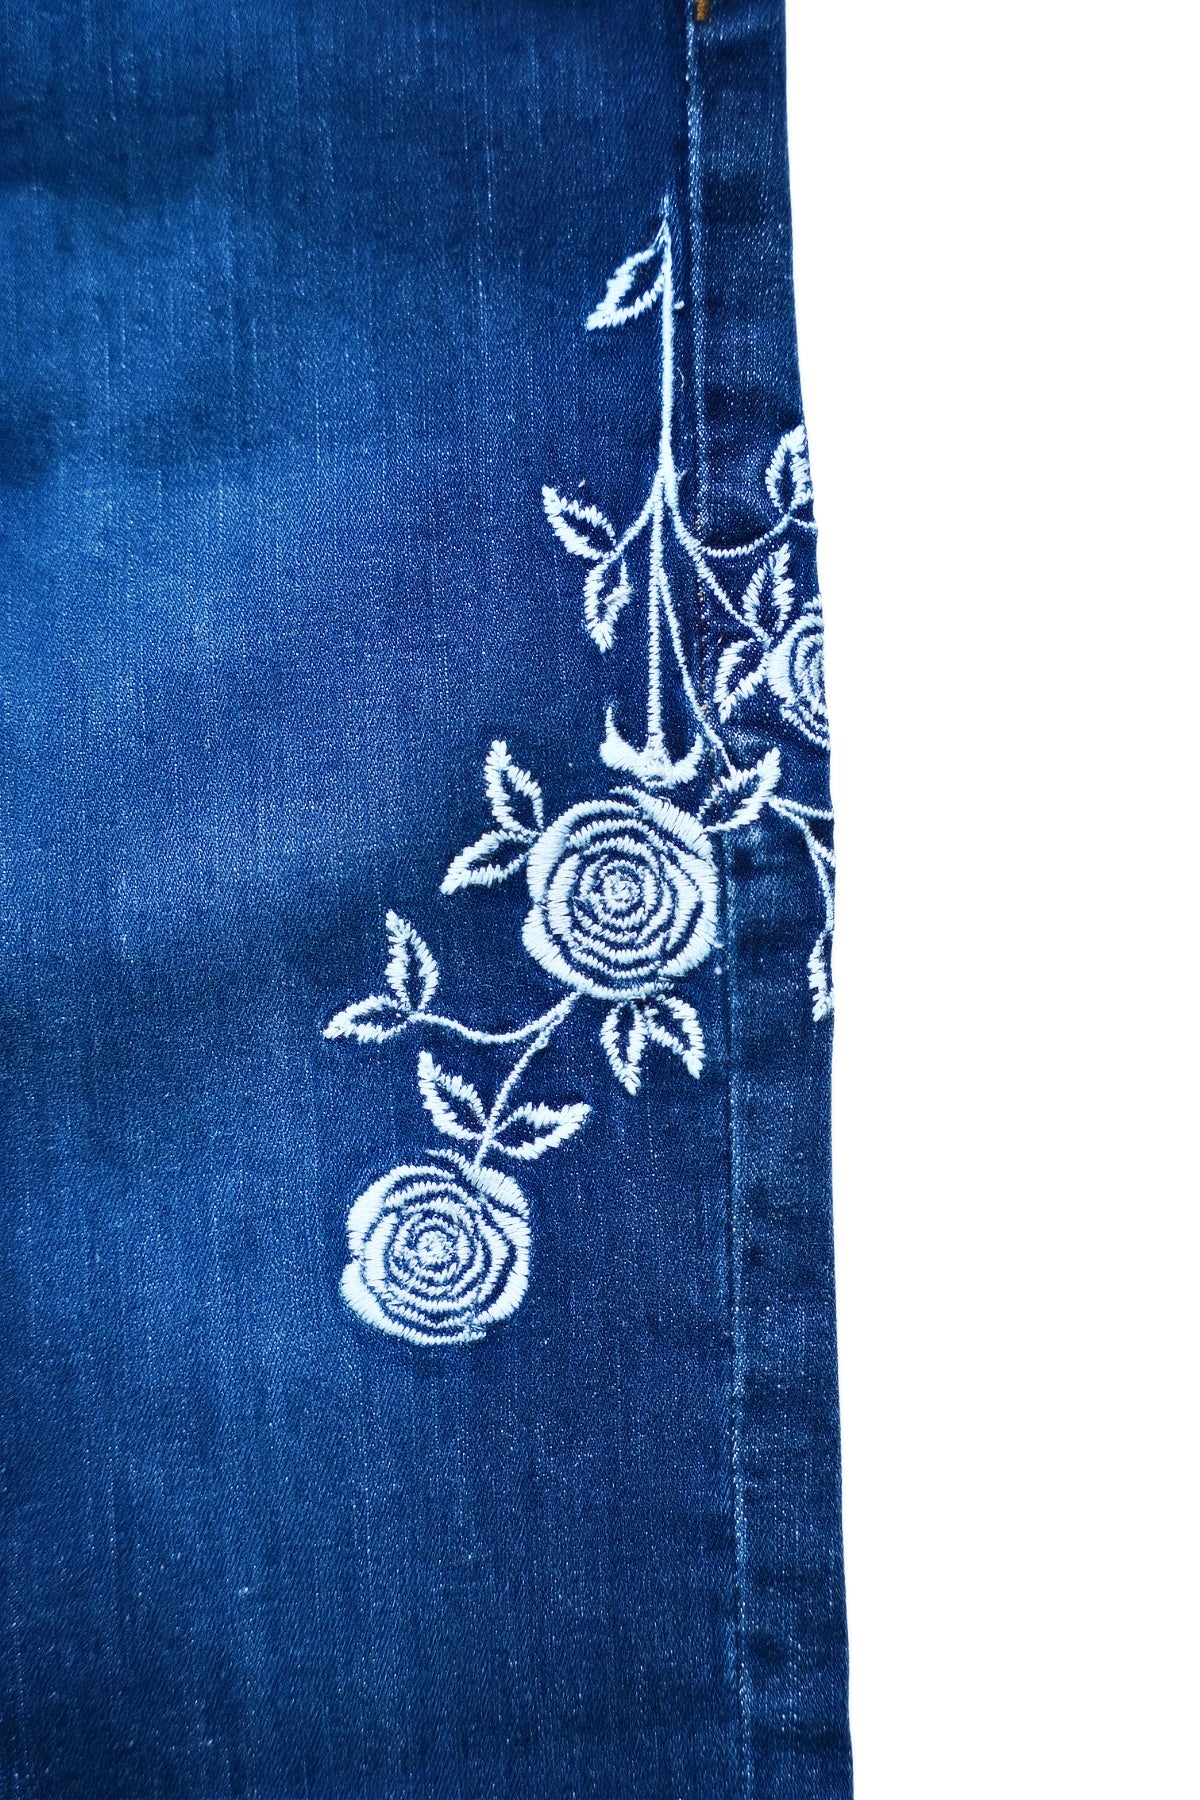 Embroidered Capri Pants (DHP-165)